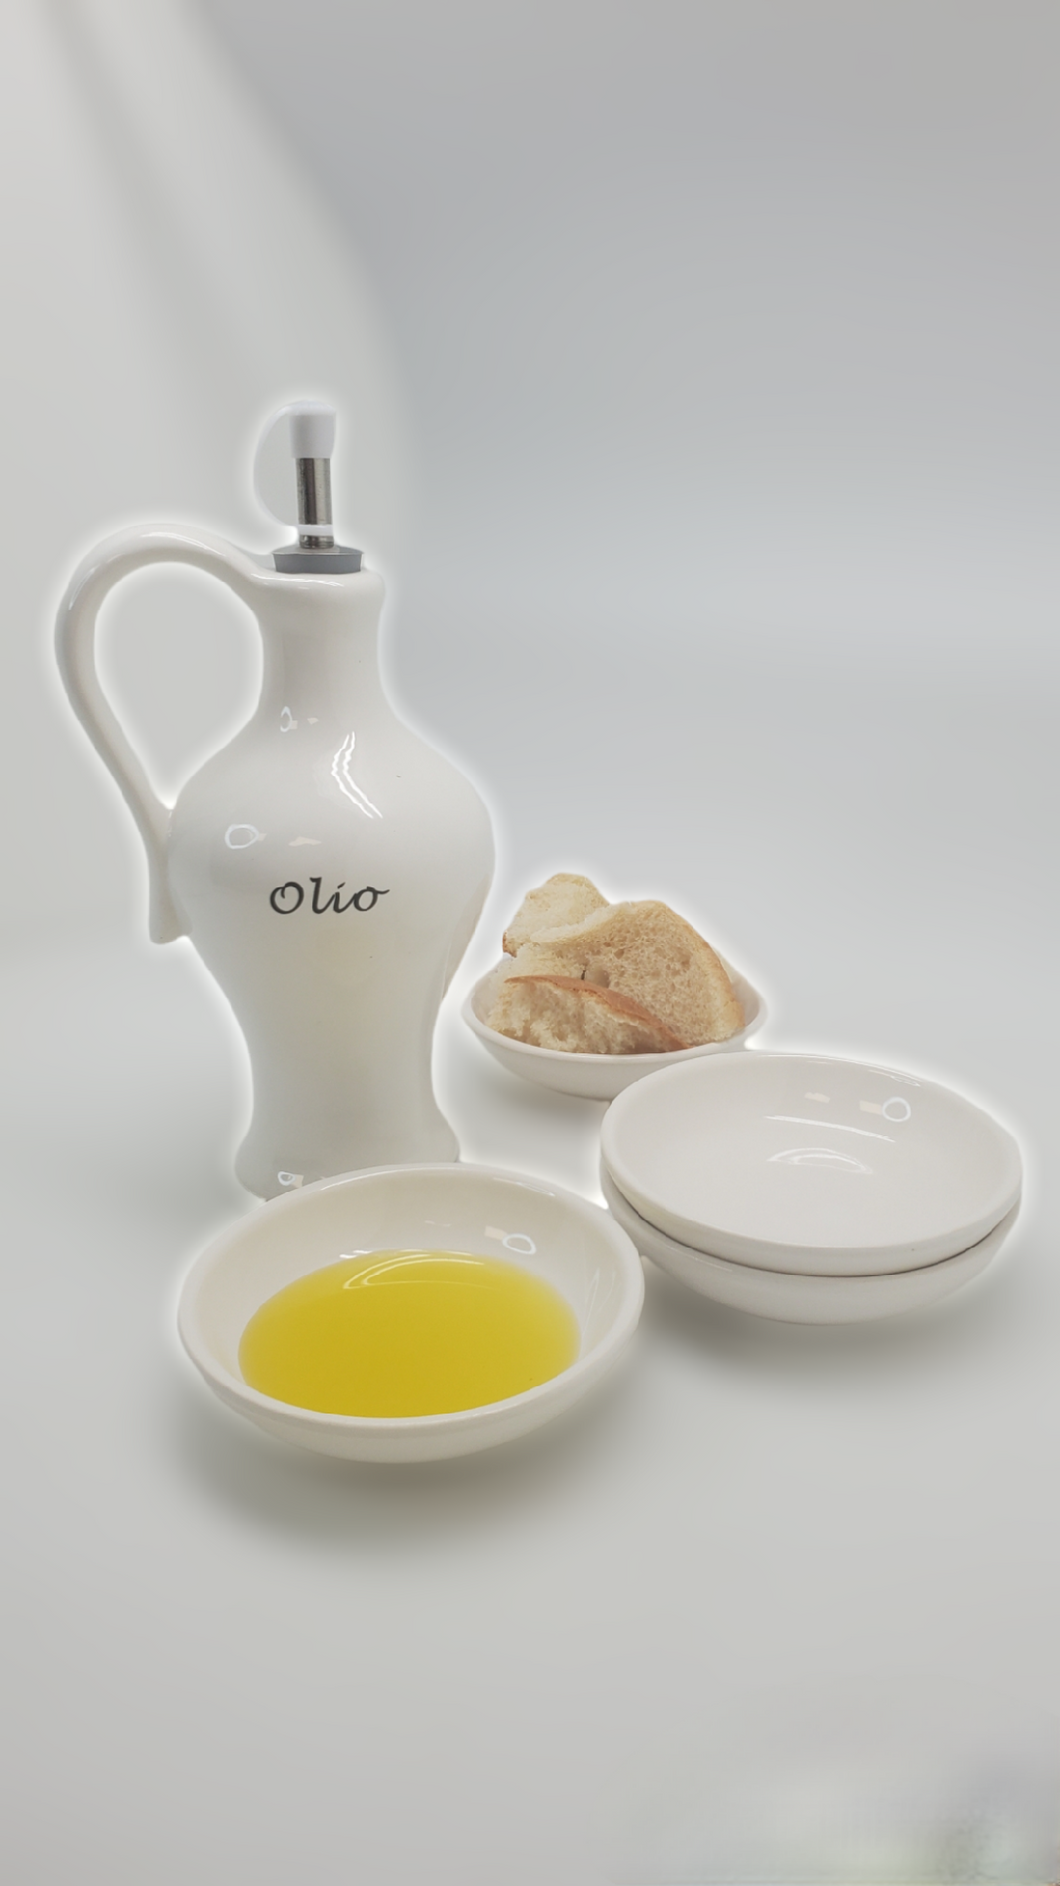 Cucina Italiana Ceramic Olive Oil Dispenser Cruet with 4 Dipping Plates #0179/W